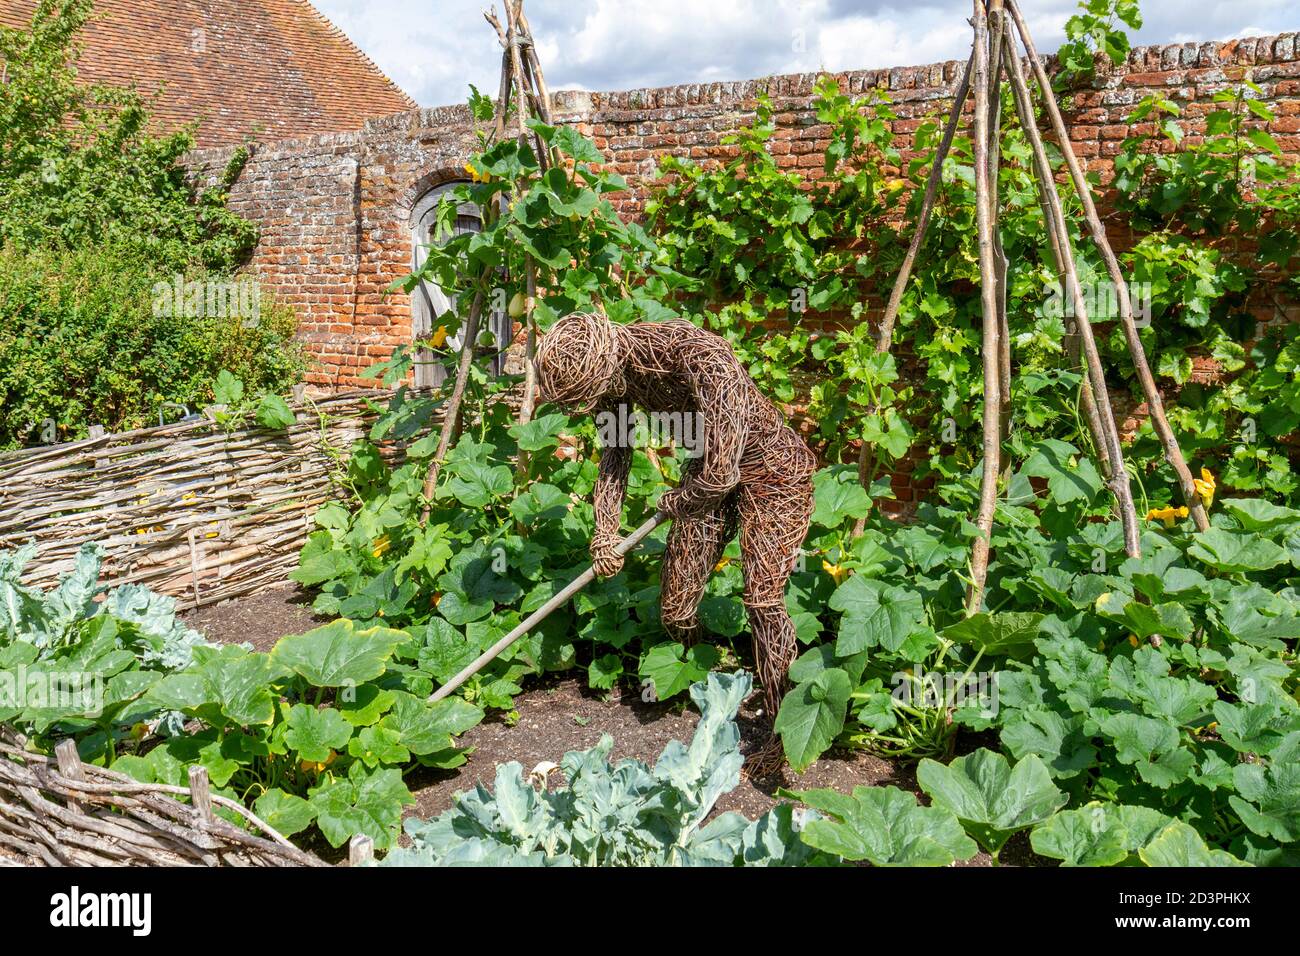 Wicker man figure in the Tudor walled garden, Cressing Temple Barns, Essex, UK. Stock Photo